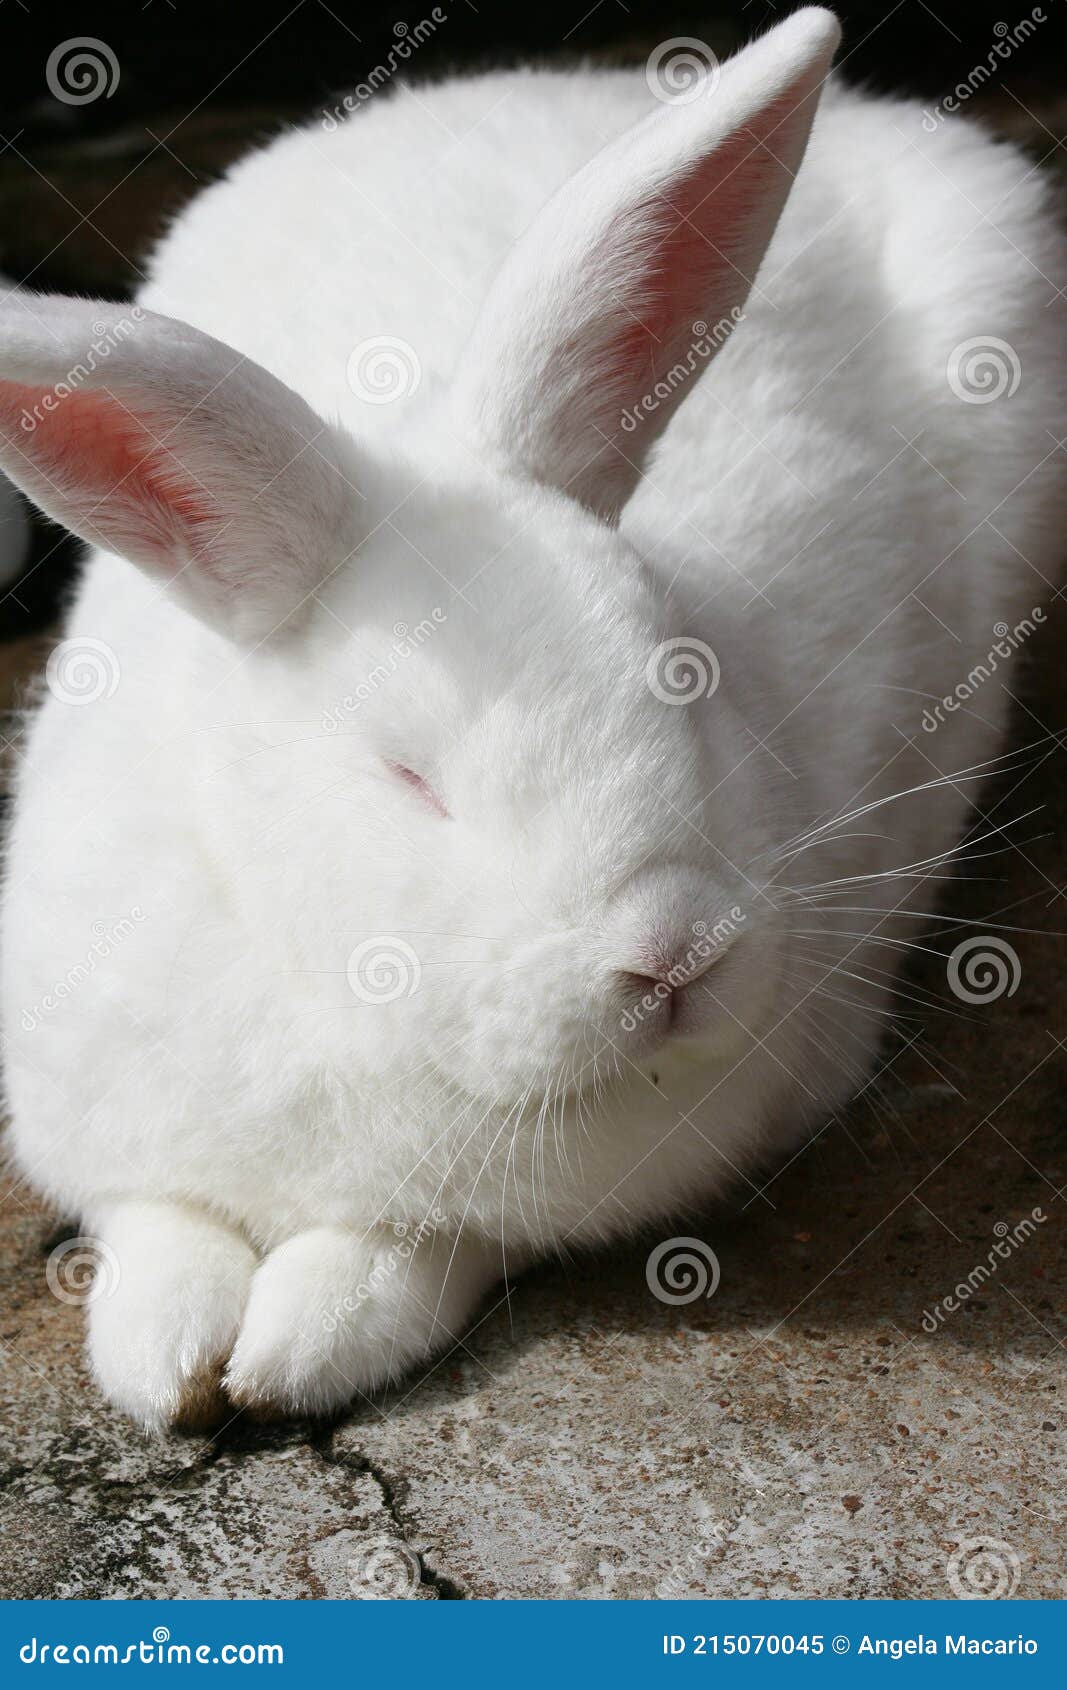 a fluffy white rabbit lying down.